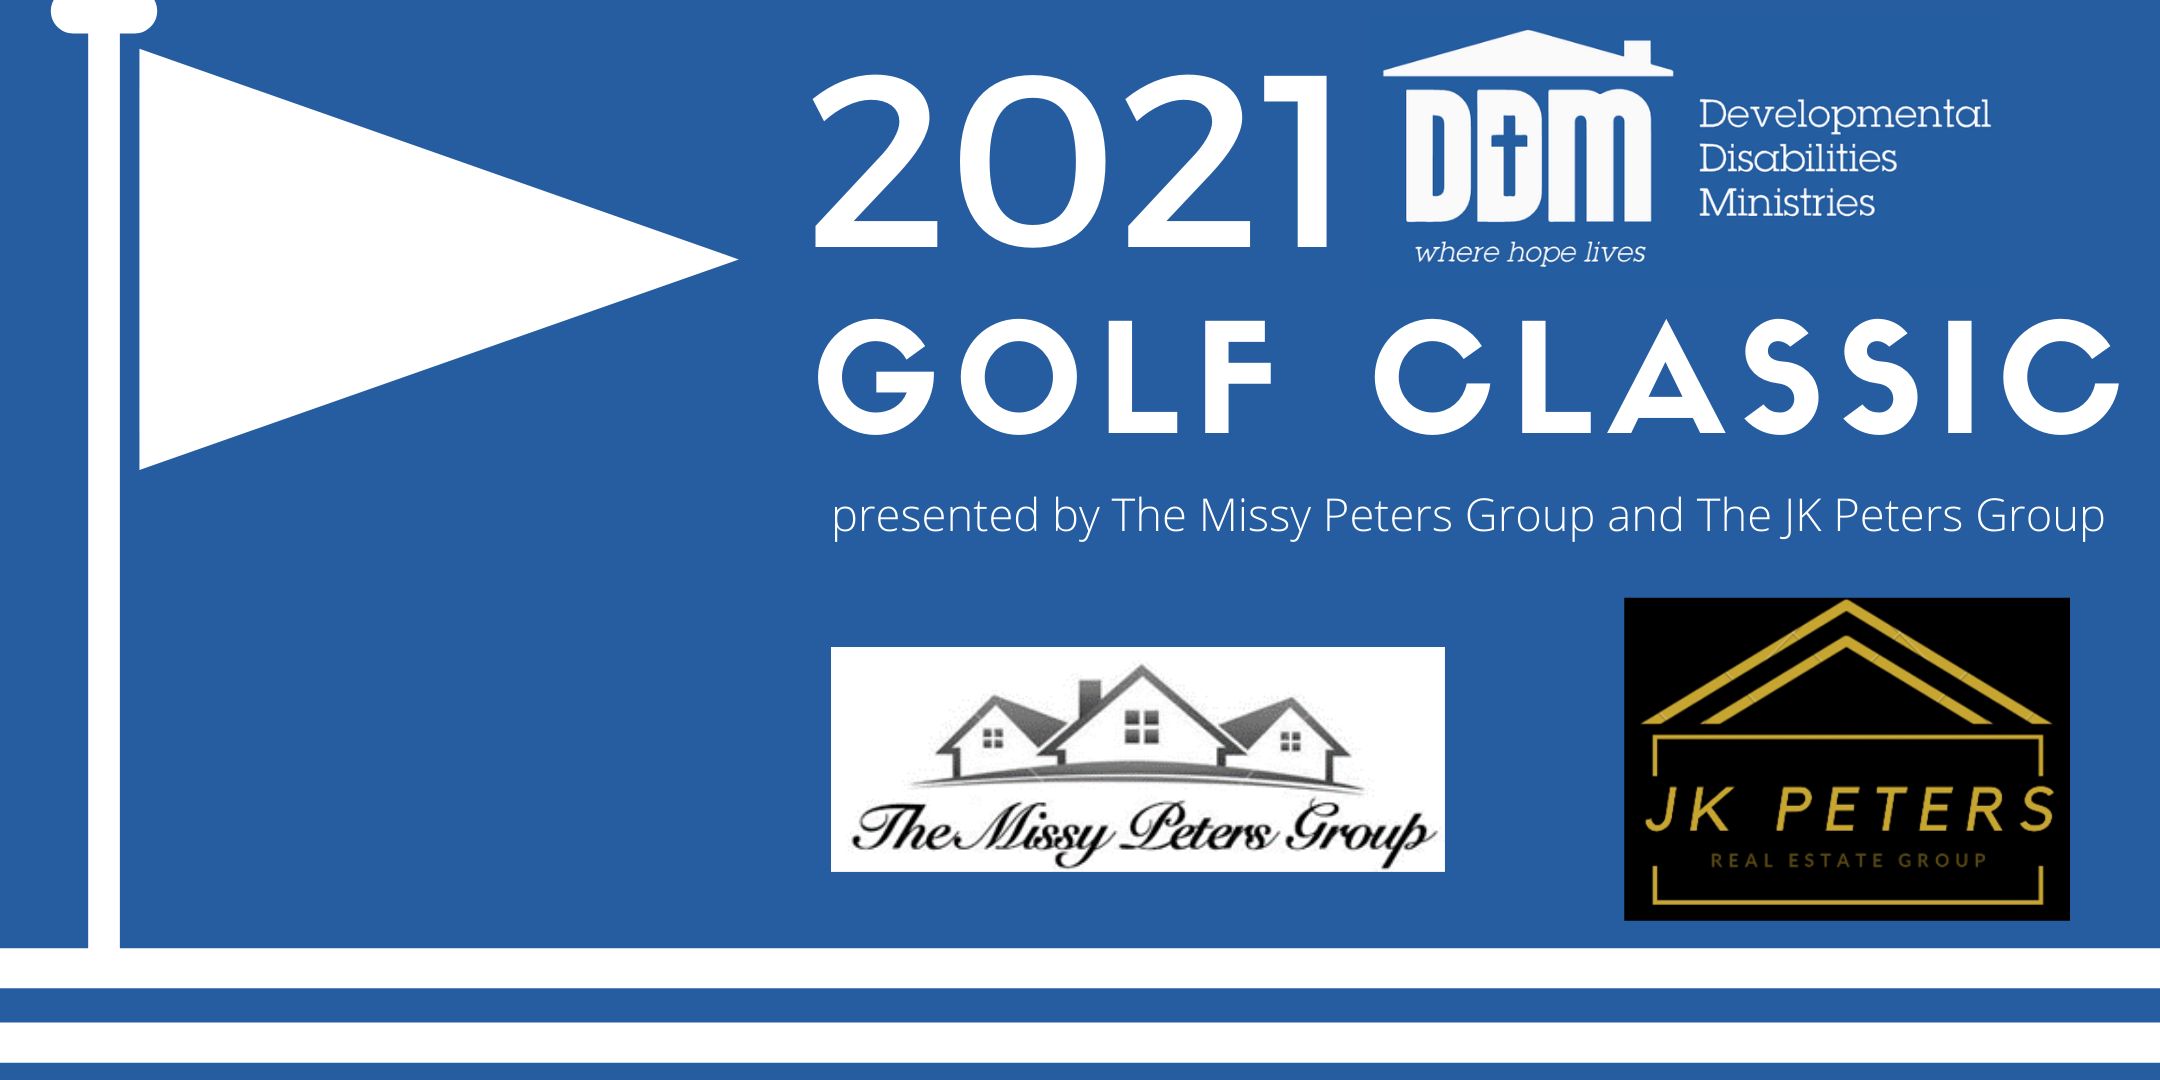 2021 DDM Golf Classic